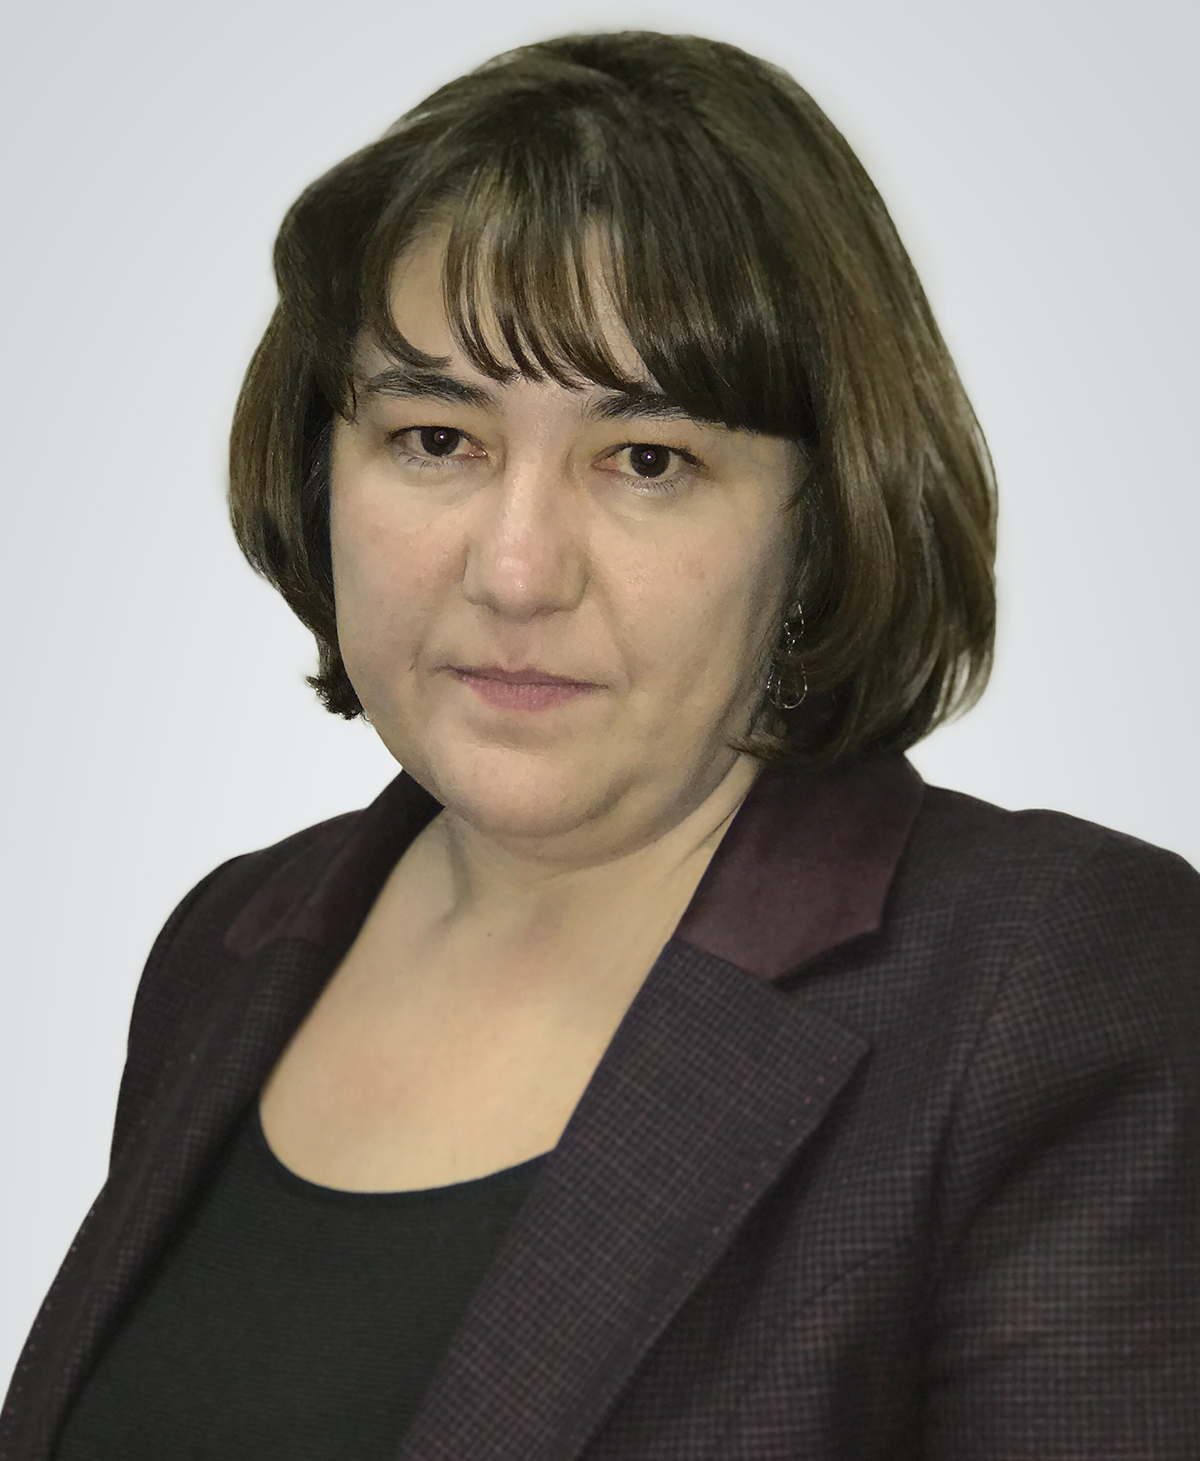 Rositza Velkova: 2023 will be a key year for Bulgaria on the way to the euro area